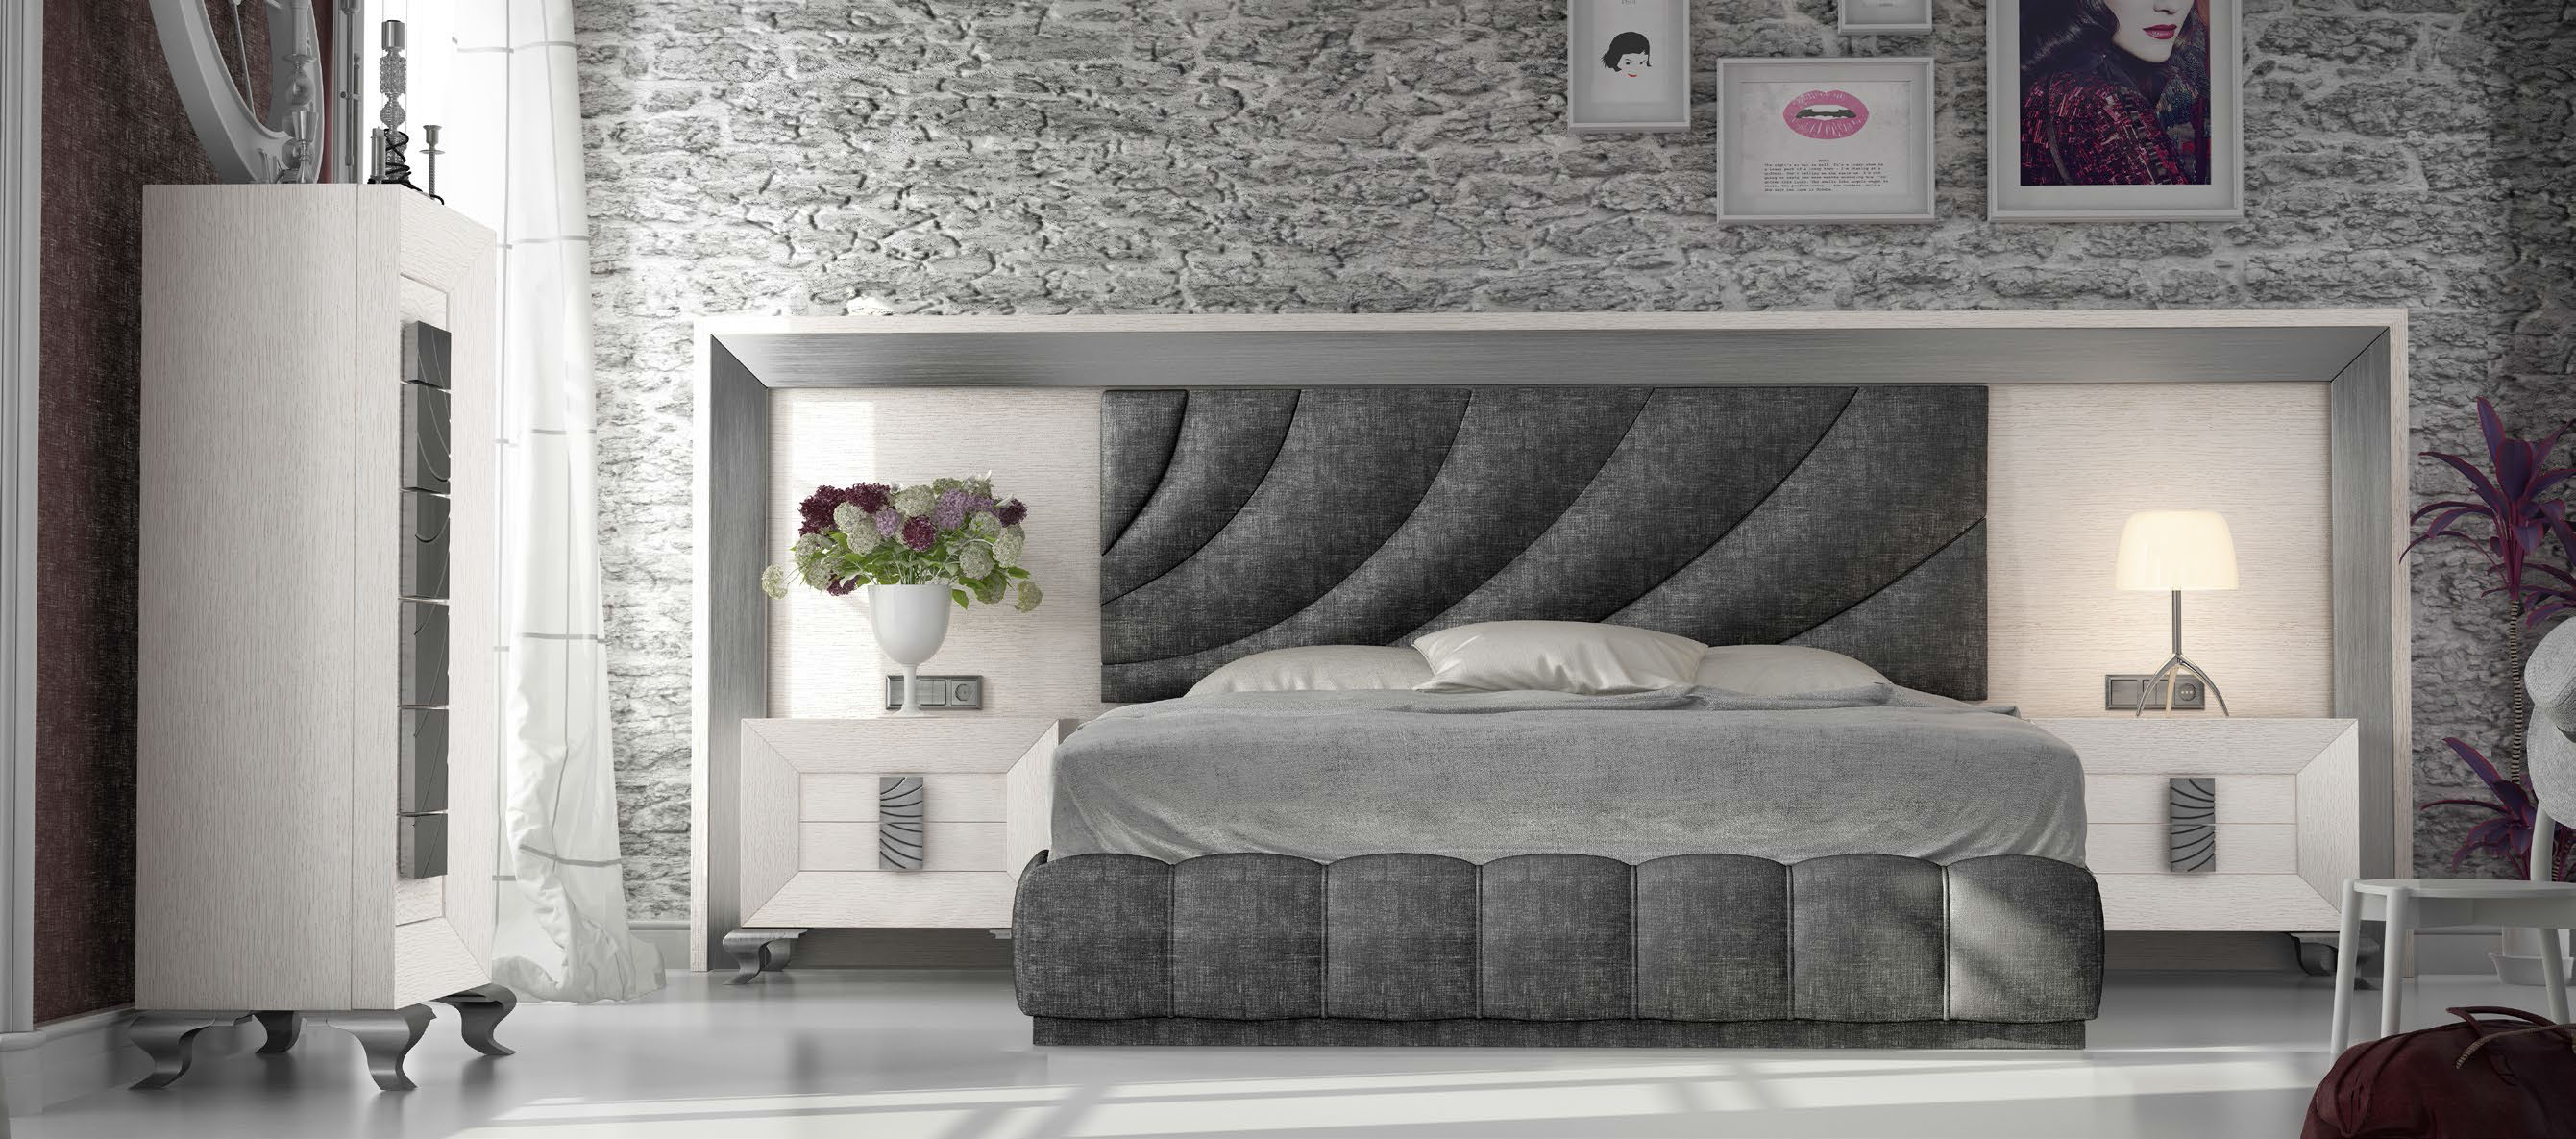 Brands Franco Furniture Bedrooms vol1, Spain DOR 112